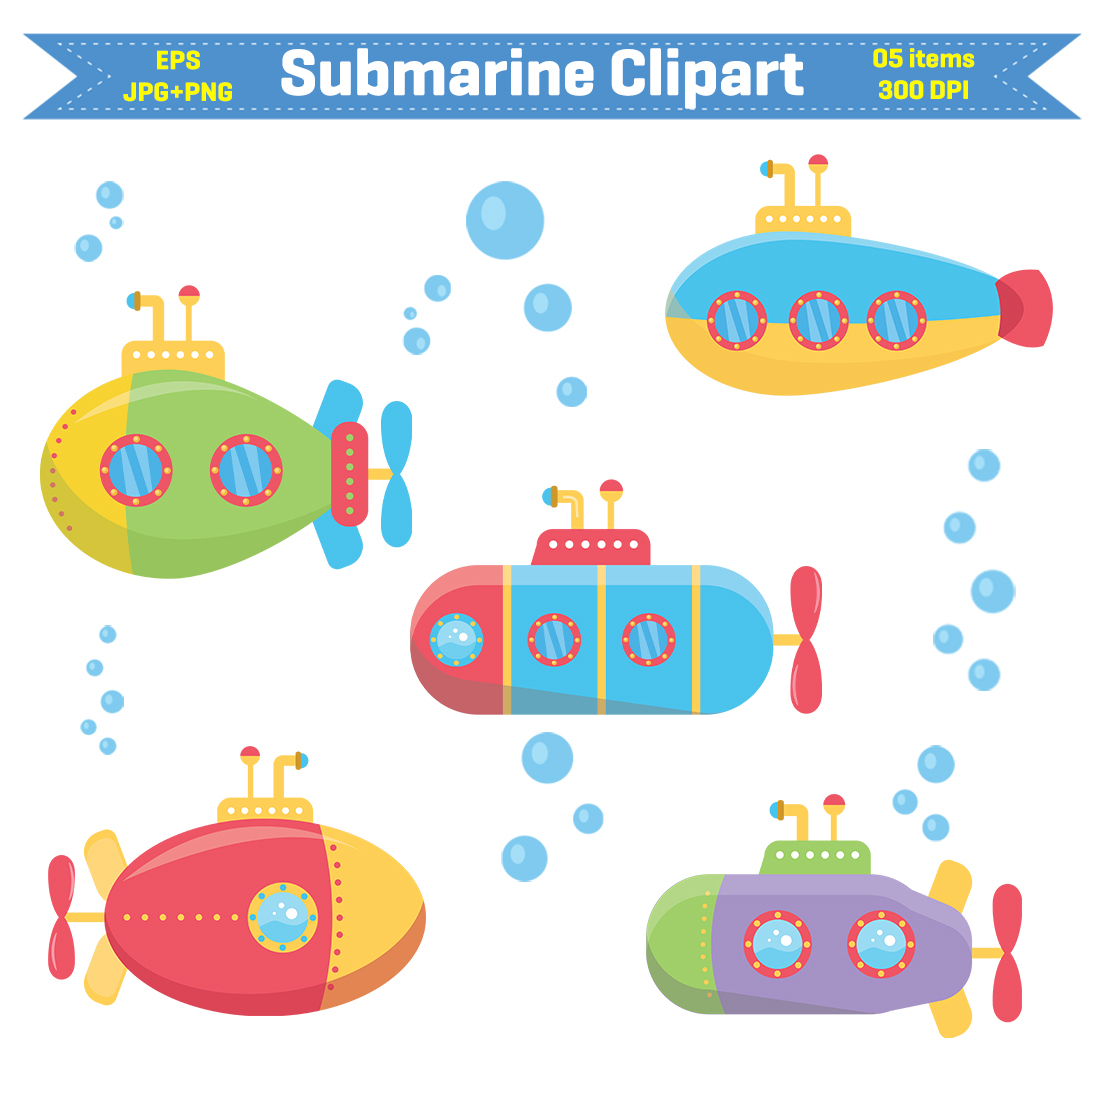 Submarine Clipart Design cover image.